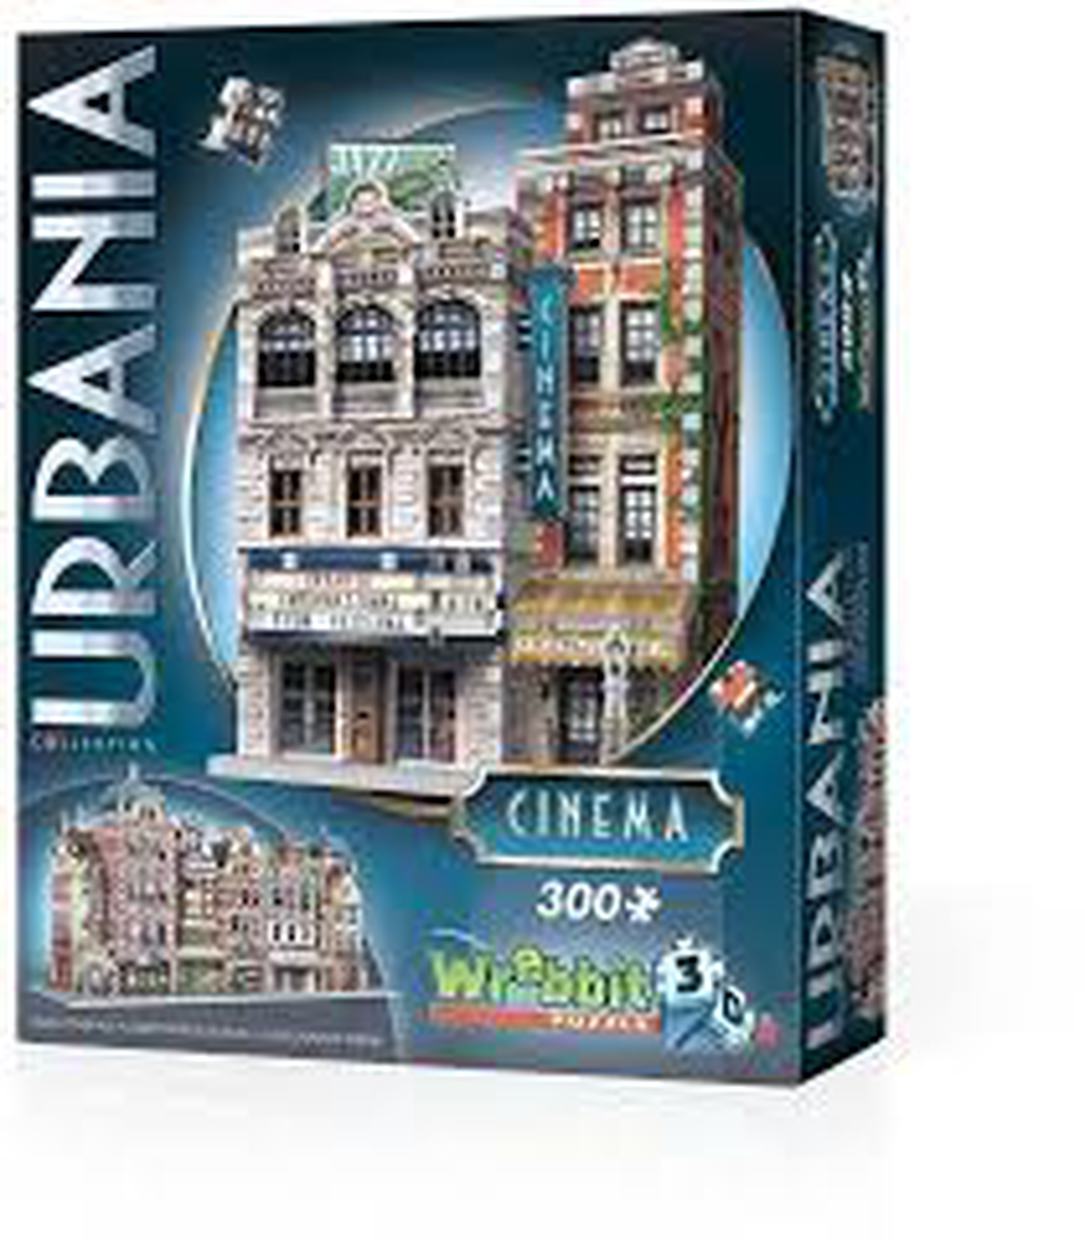 Puzzel: Urbania Cinema 3D (300)